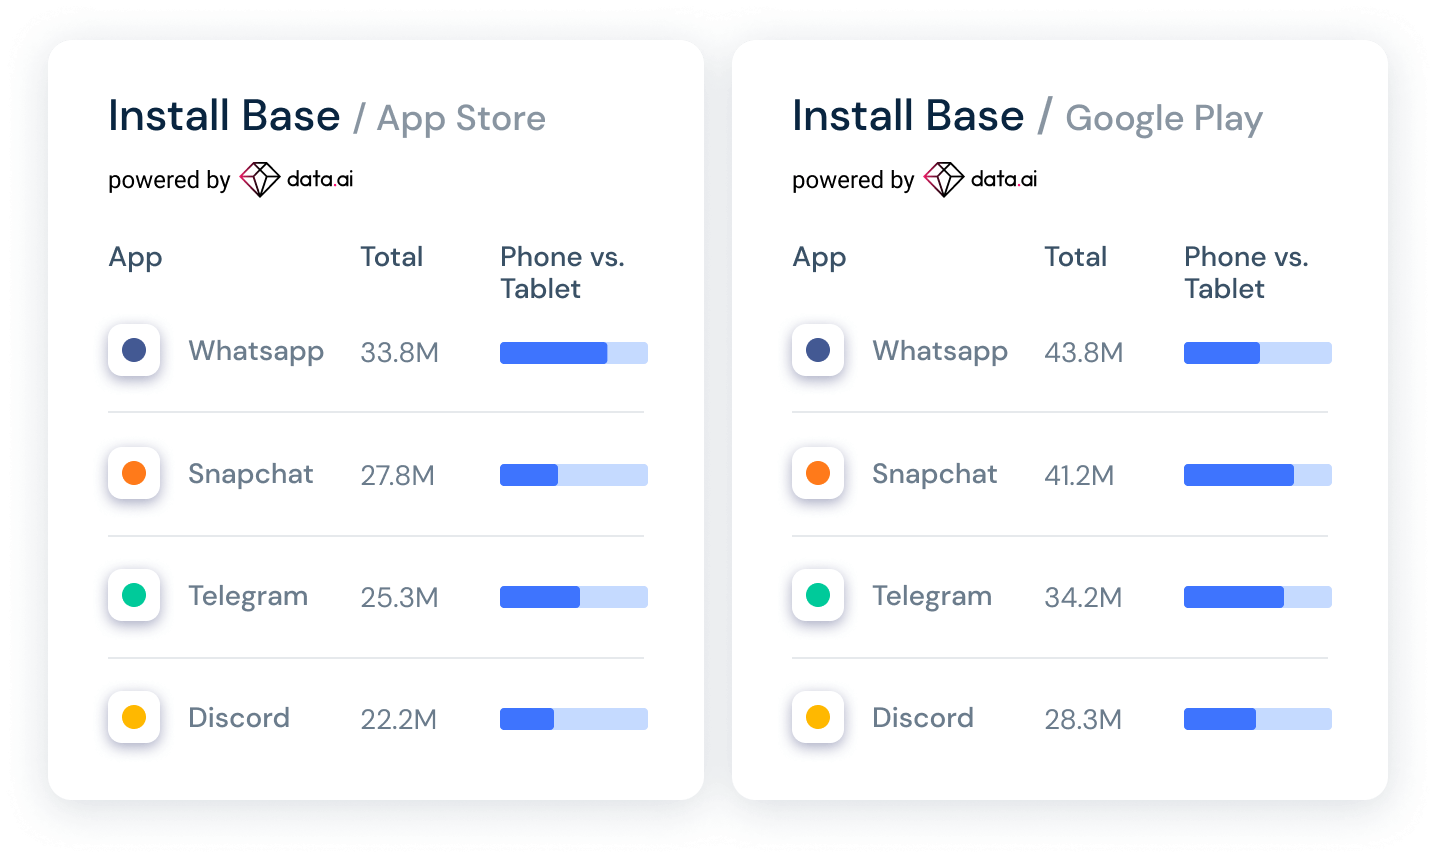 Install base app store vs google play